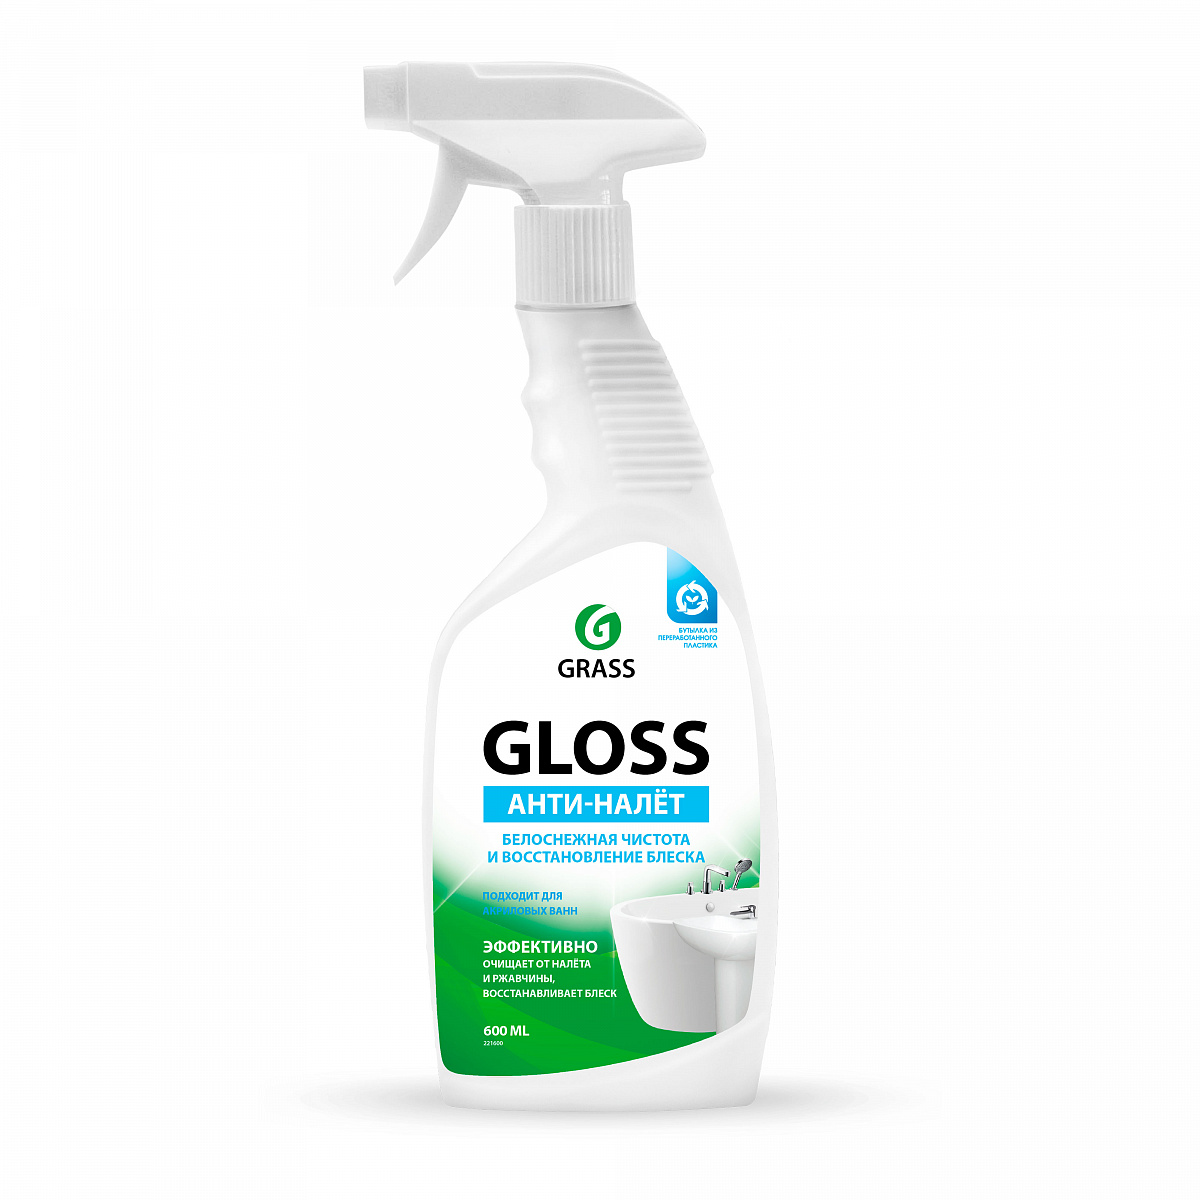 Grass Чистящее средство для ванной комнаты "Gloss" (флакон 600 мл) арт. 221600